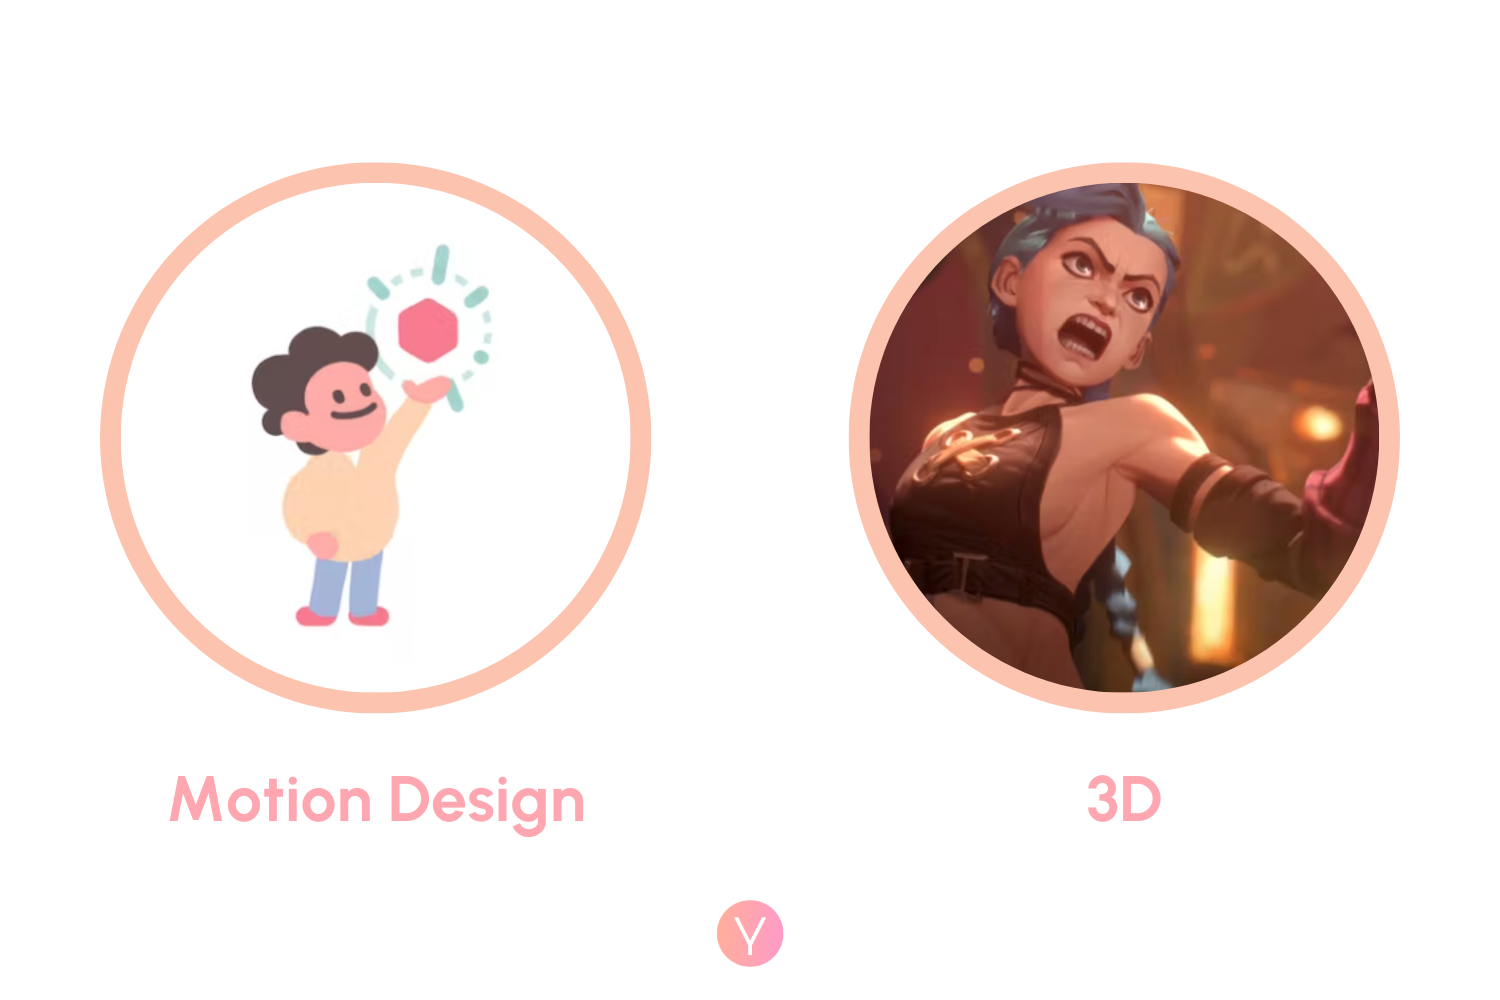 YOTTA - motiondesign vs 3D